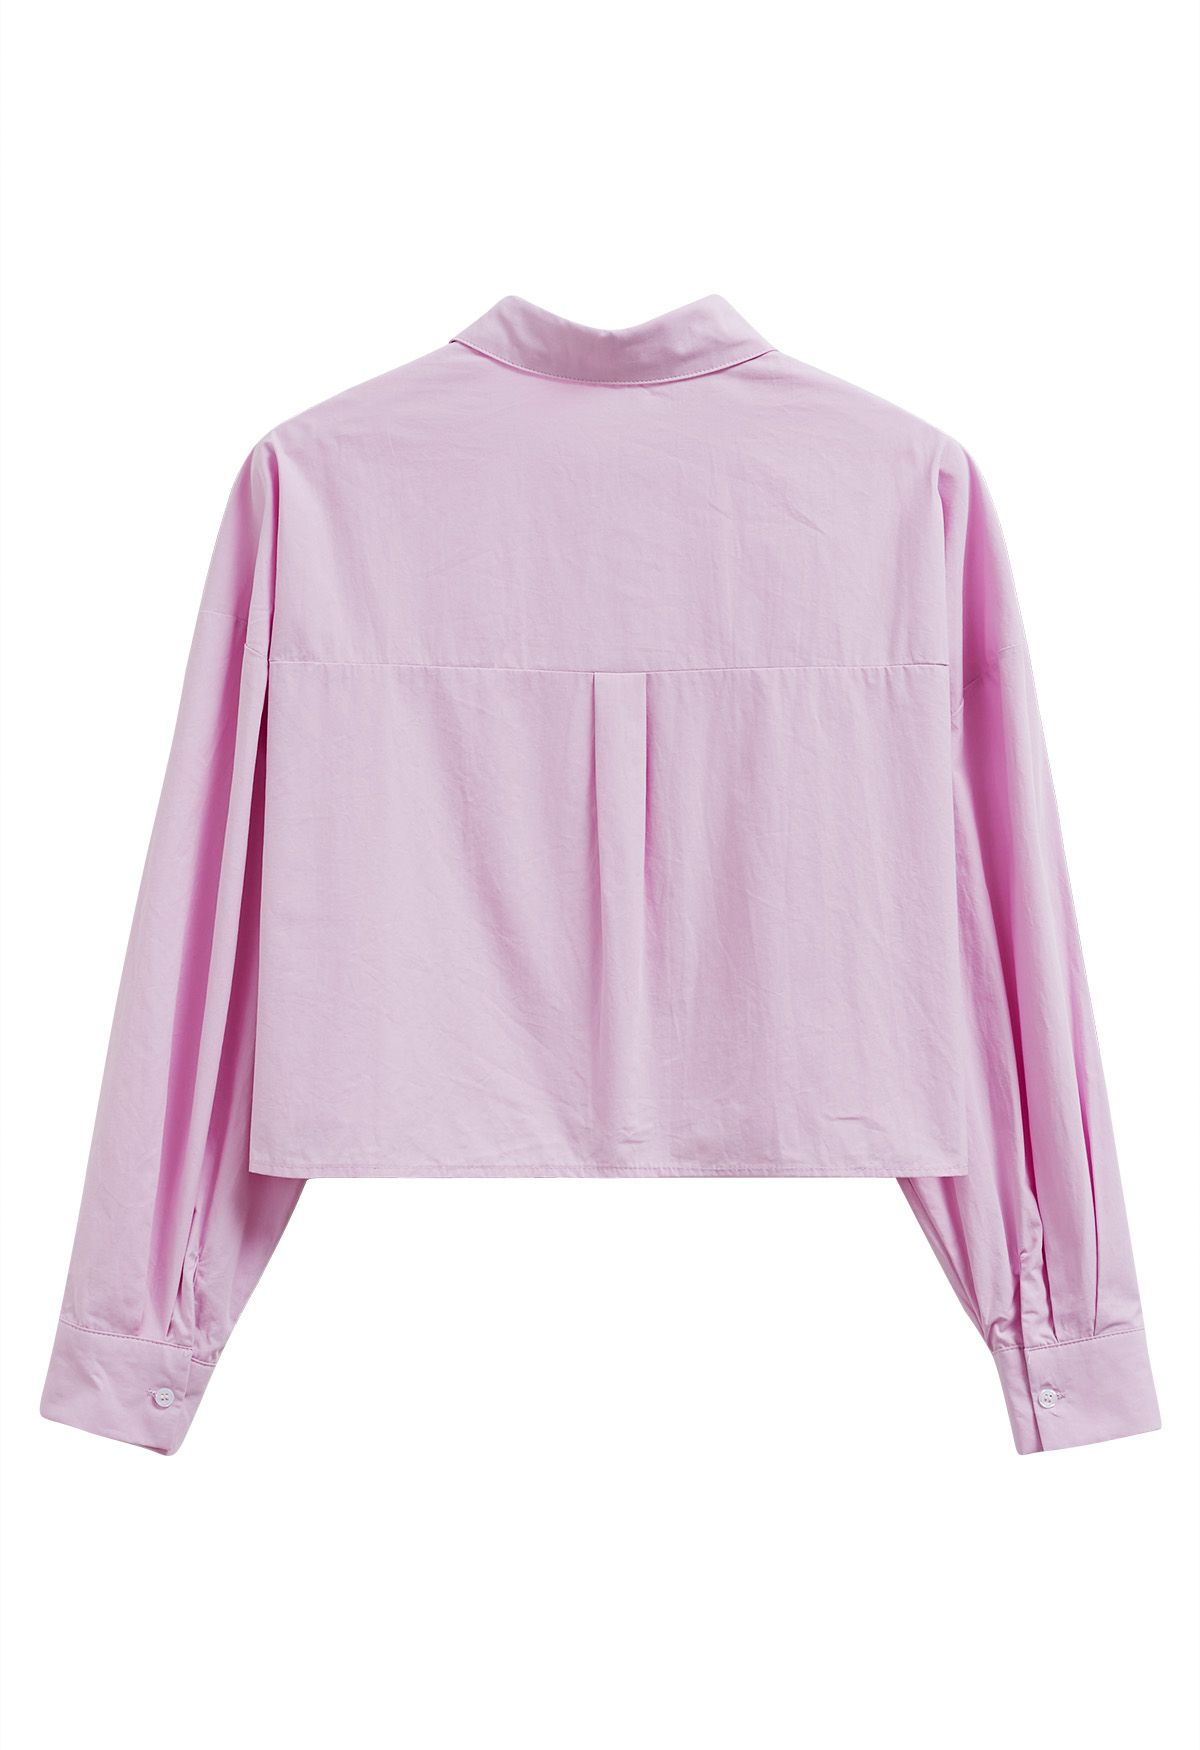 Chic Button Down Crop Shirt in Pink